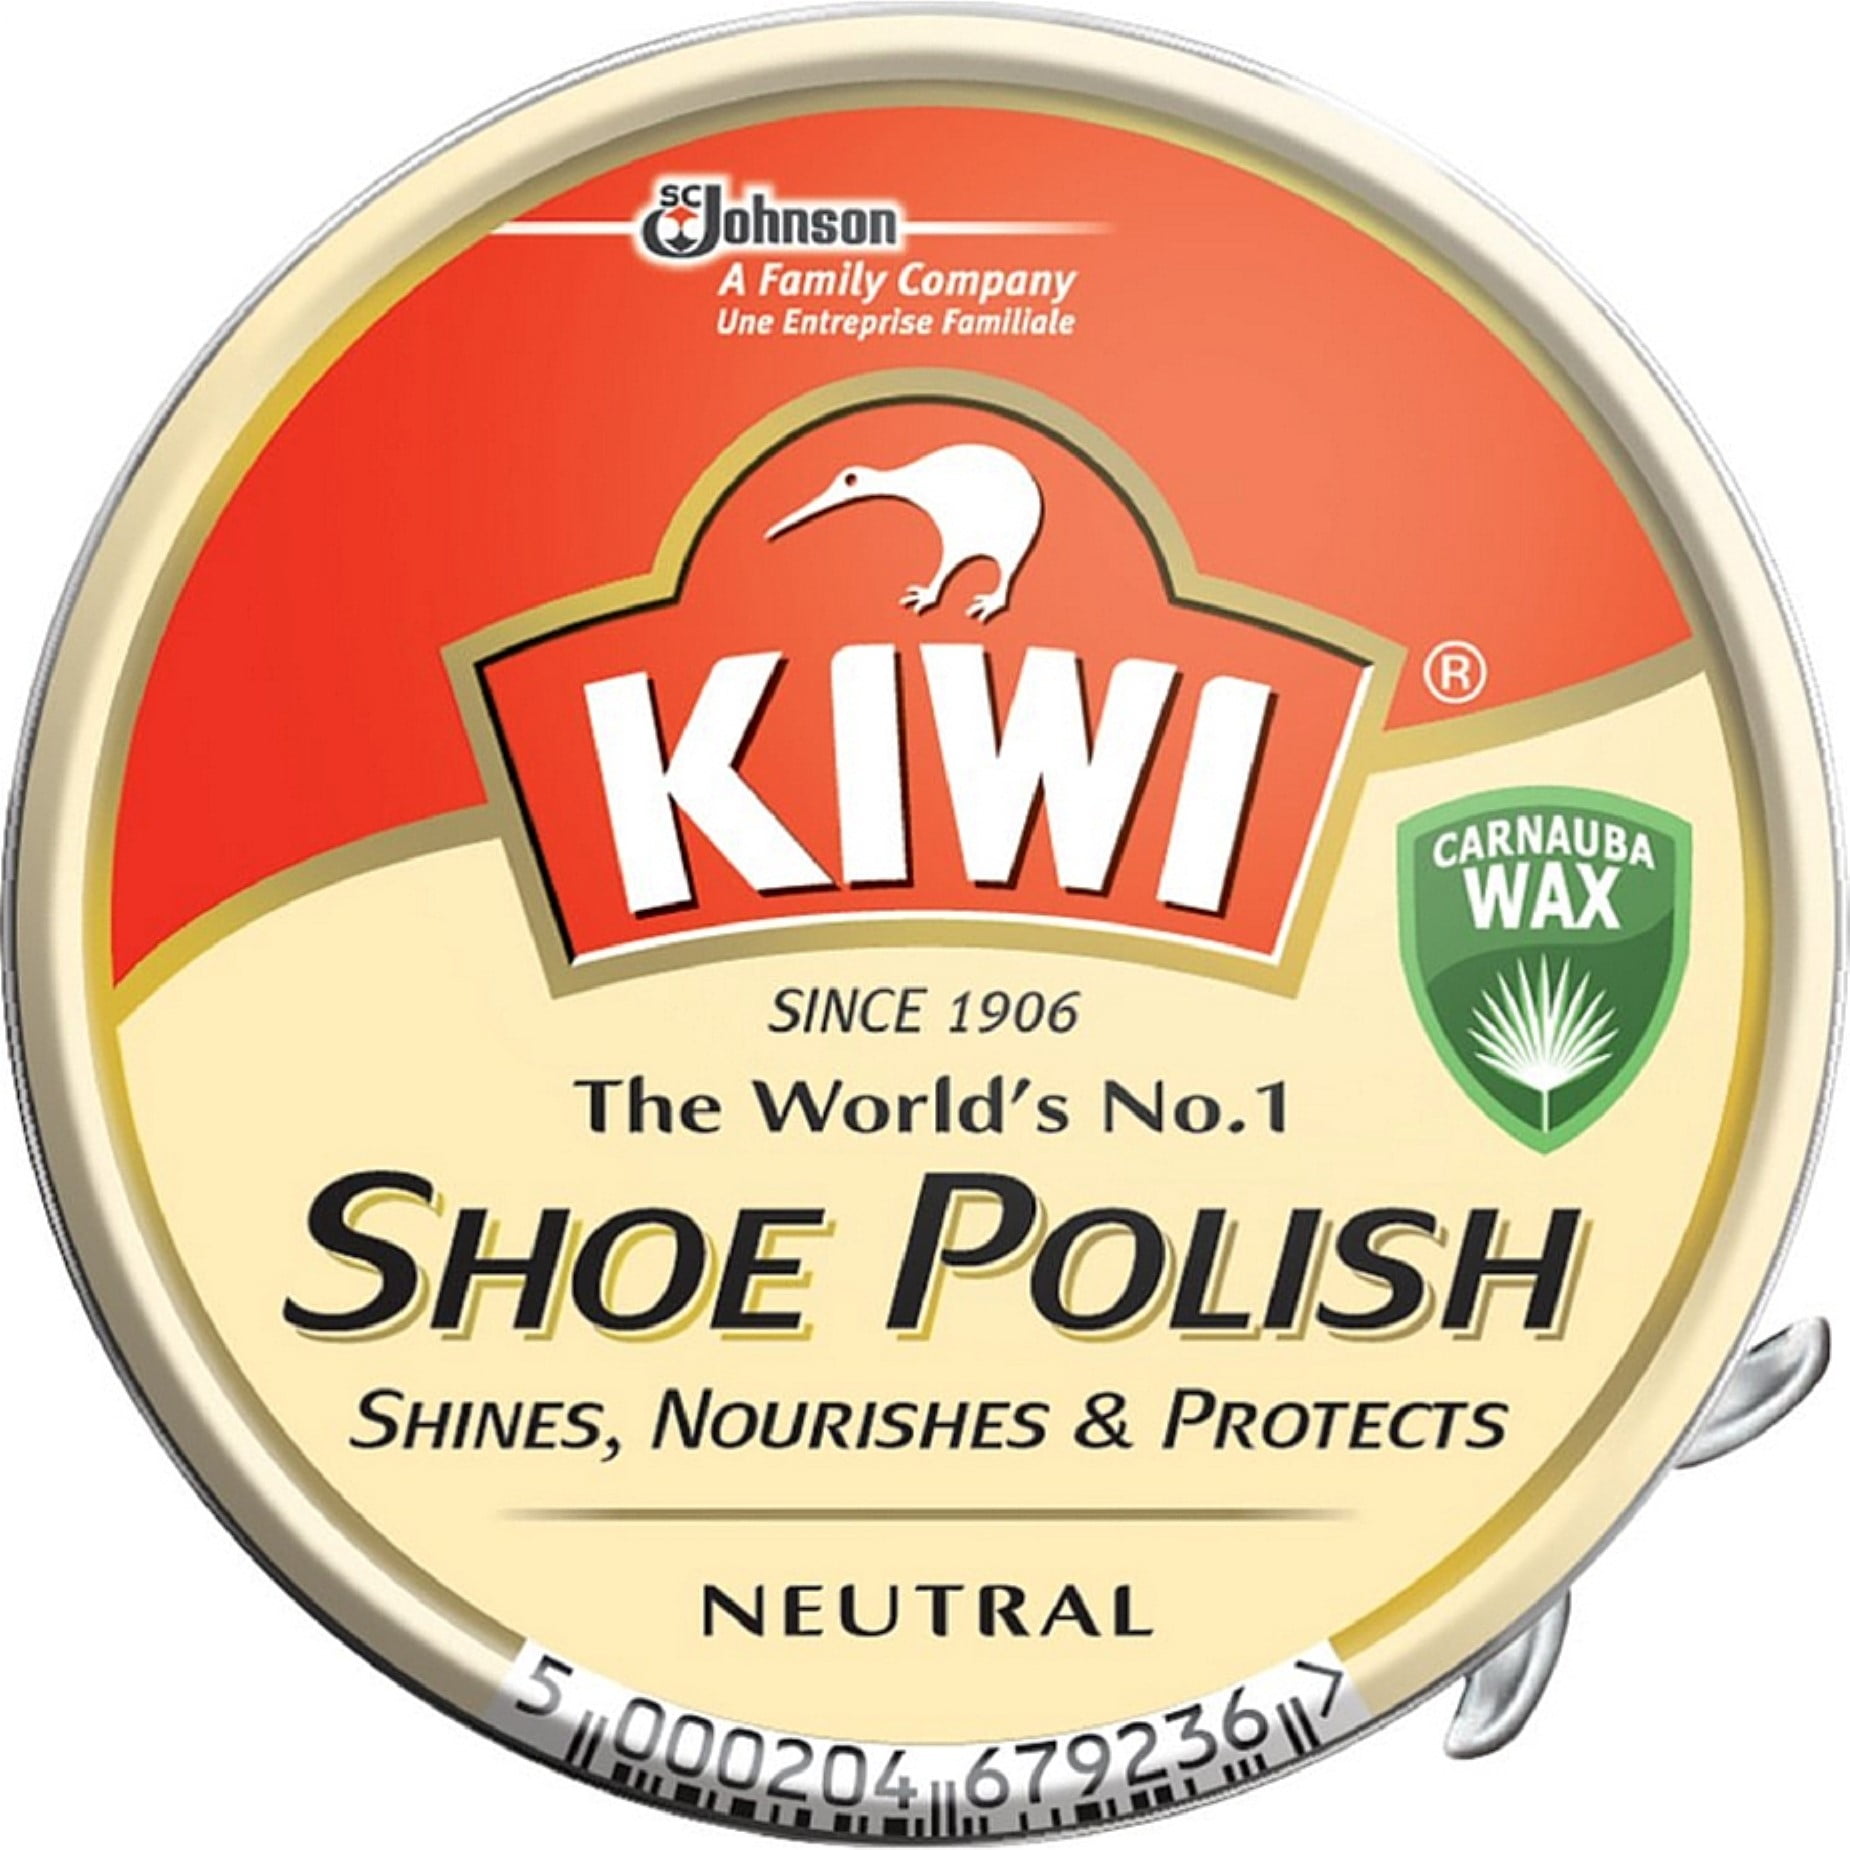 KIWI Shoe Polish, Neutral 1.125 oz 